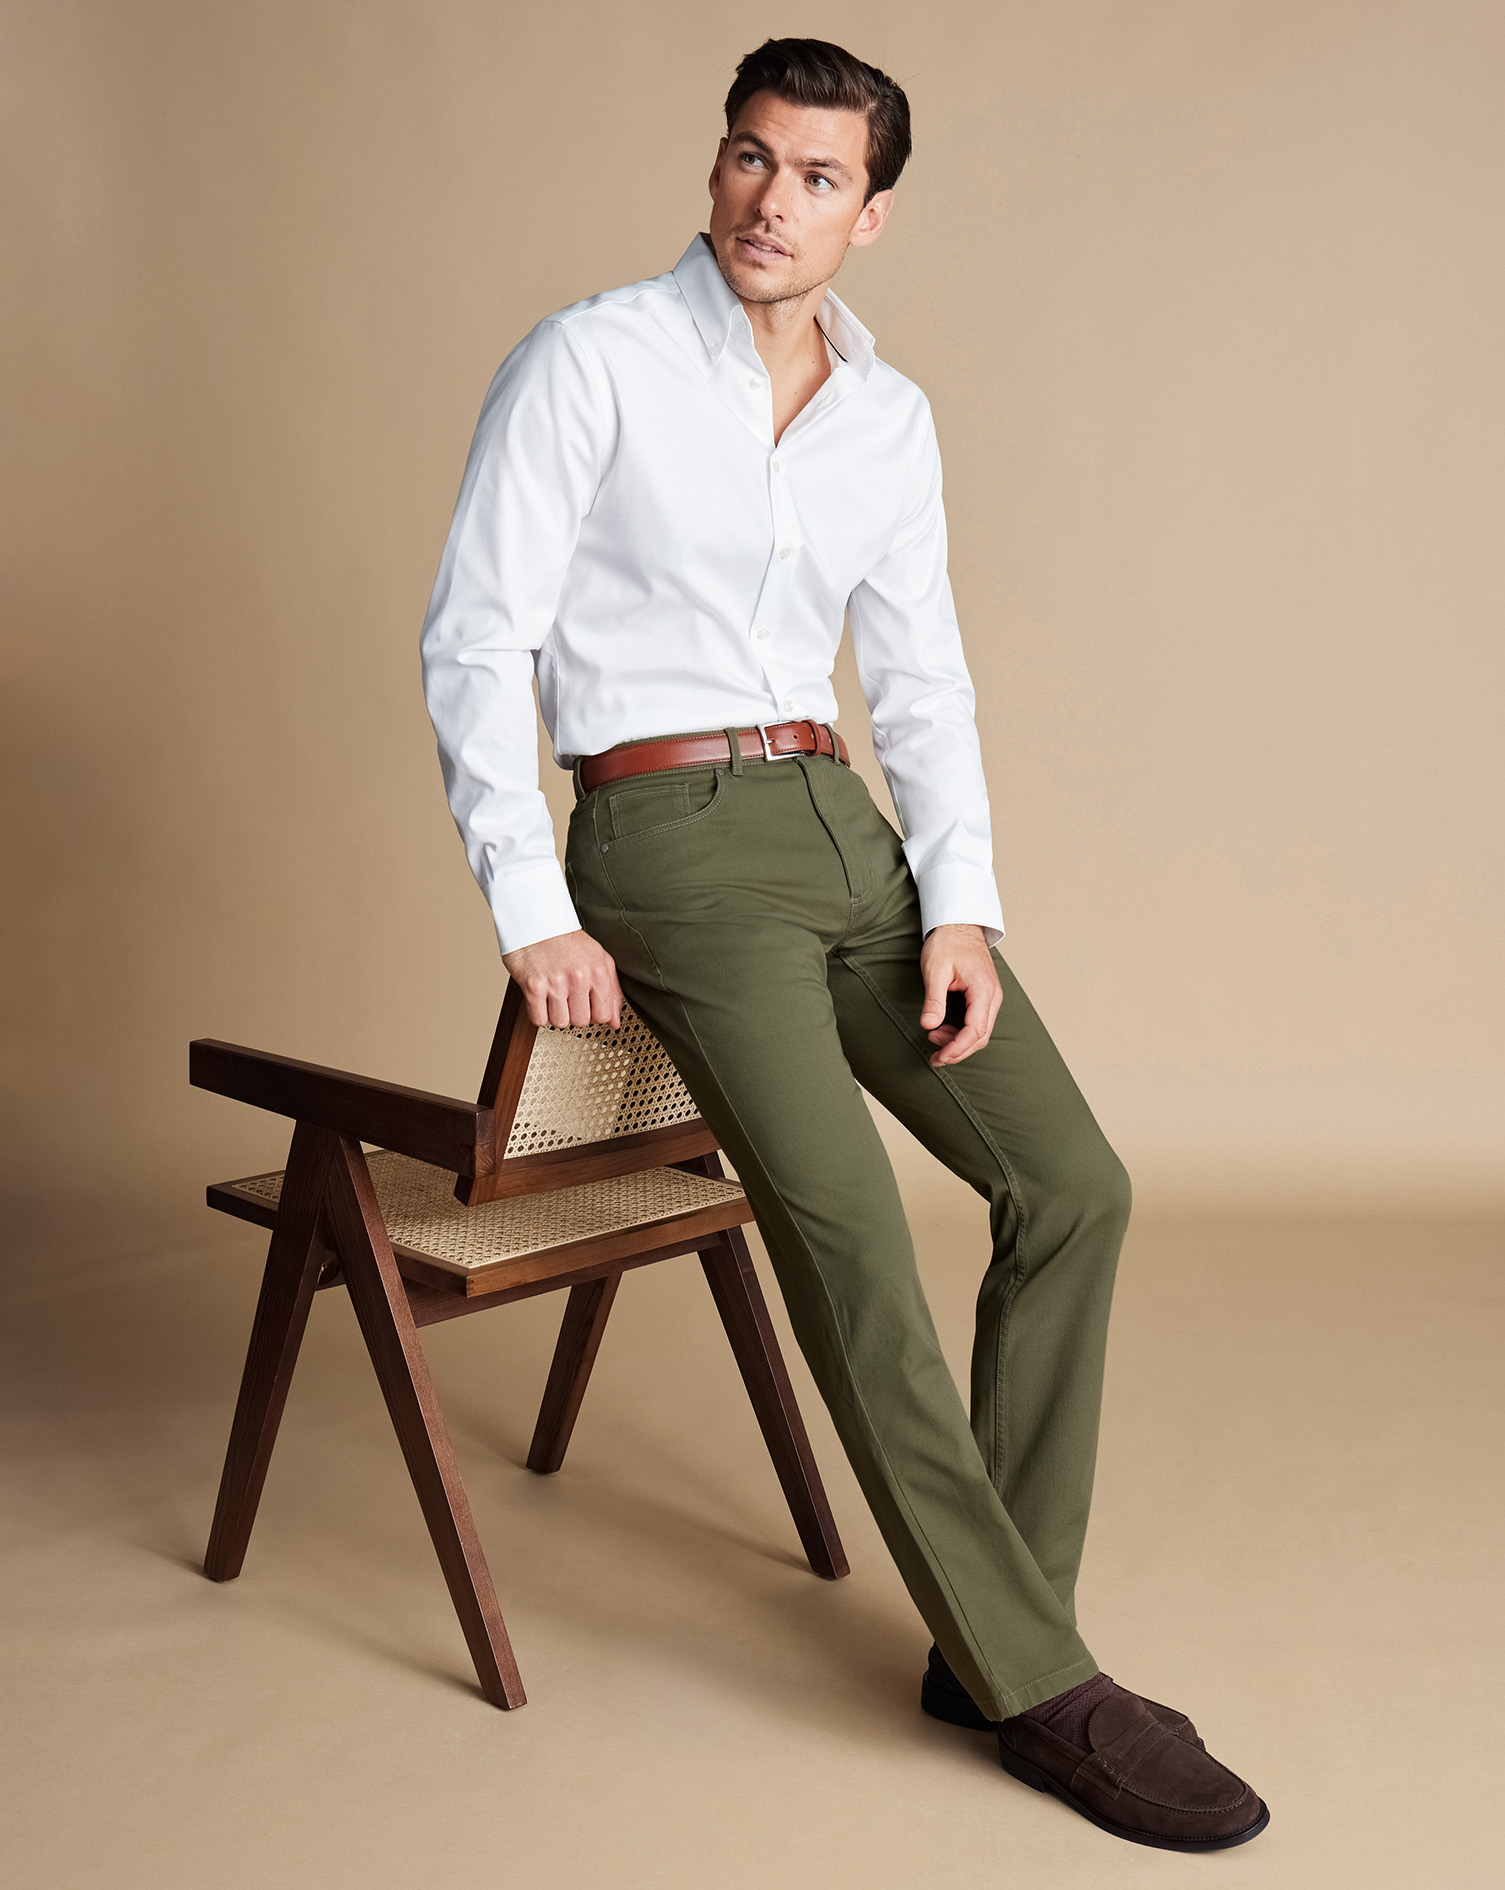 Men's Charles Tyrwhitt Twill 5 Pocket Jeans - Olive Green Size W32 L30 Cotton
